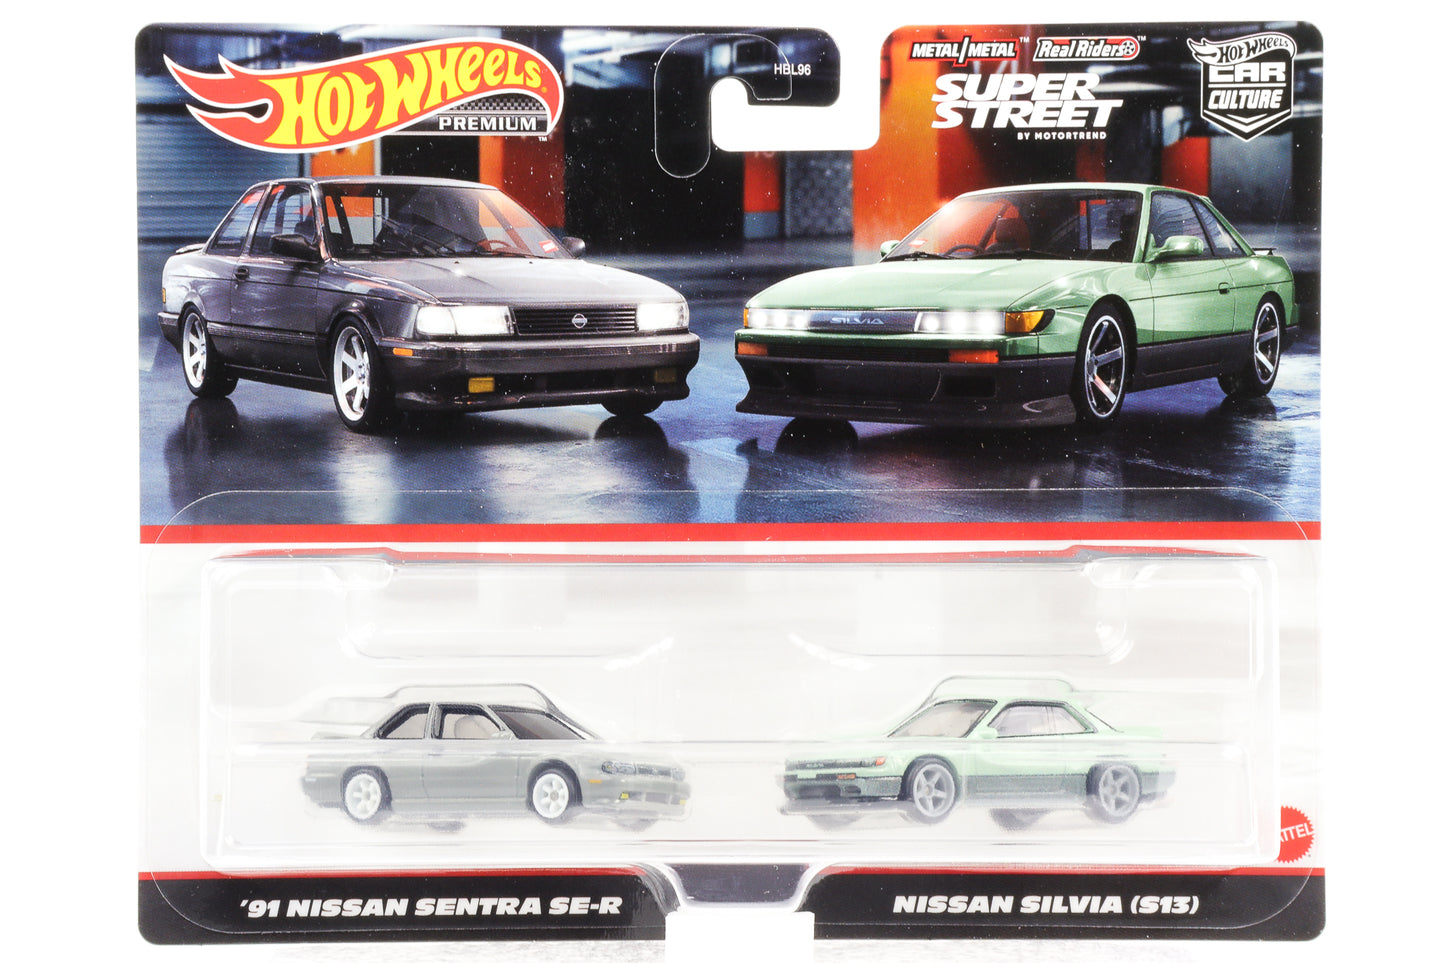 1:64 Set of 2 1991 Nissan Sentra SE-R + Nissan Silvia (S13) Hot Wheels Premium